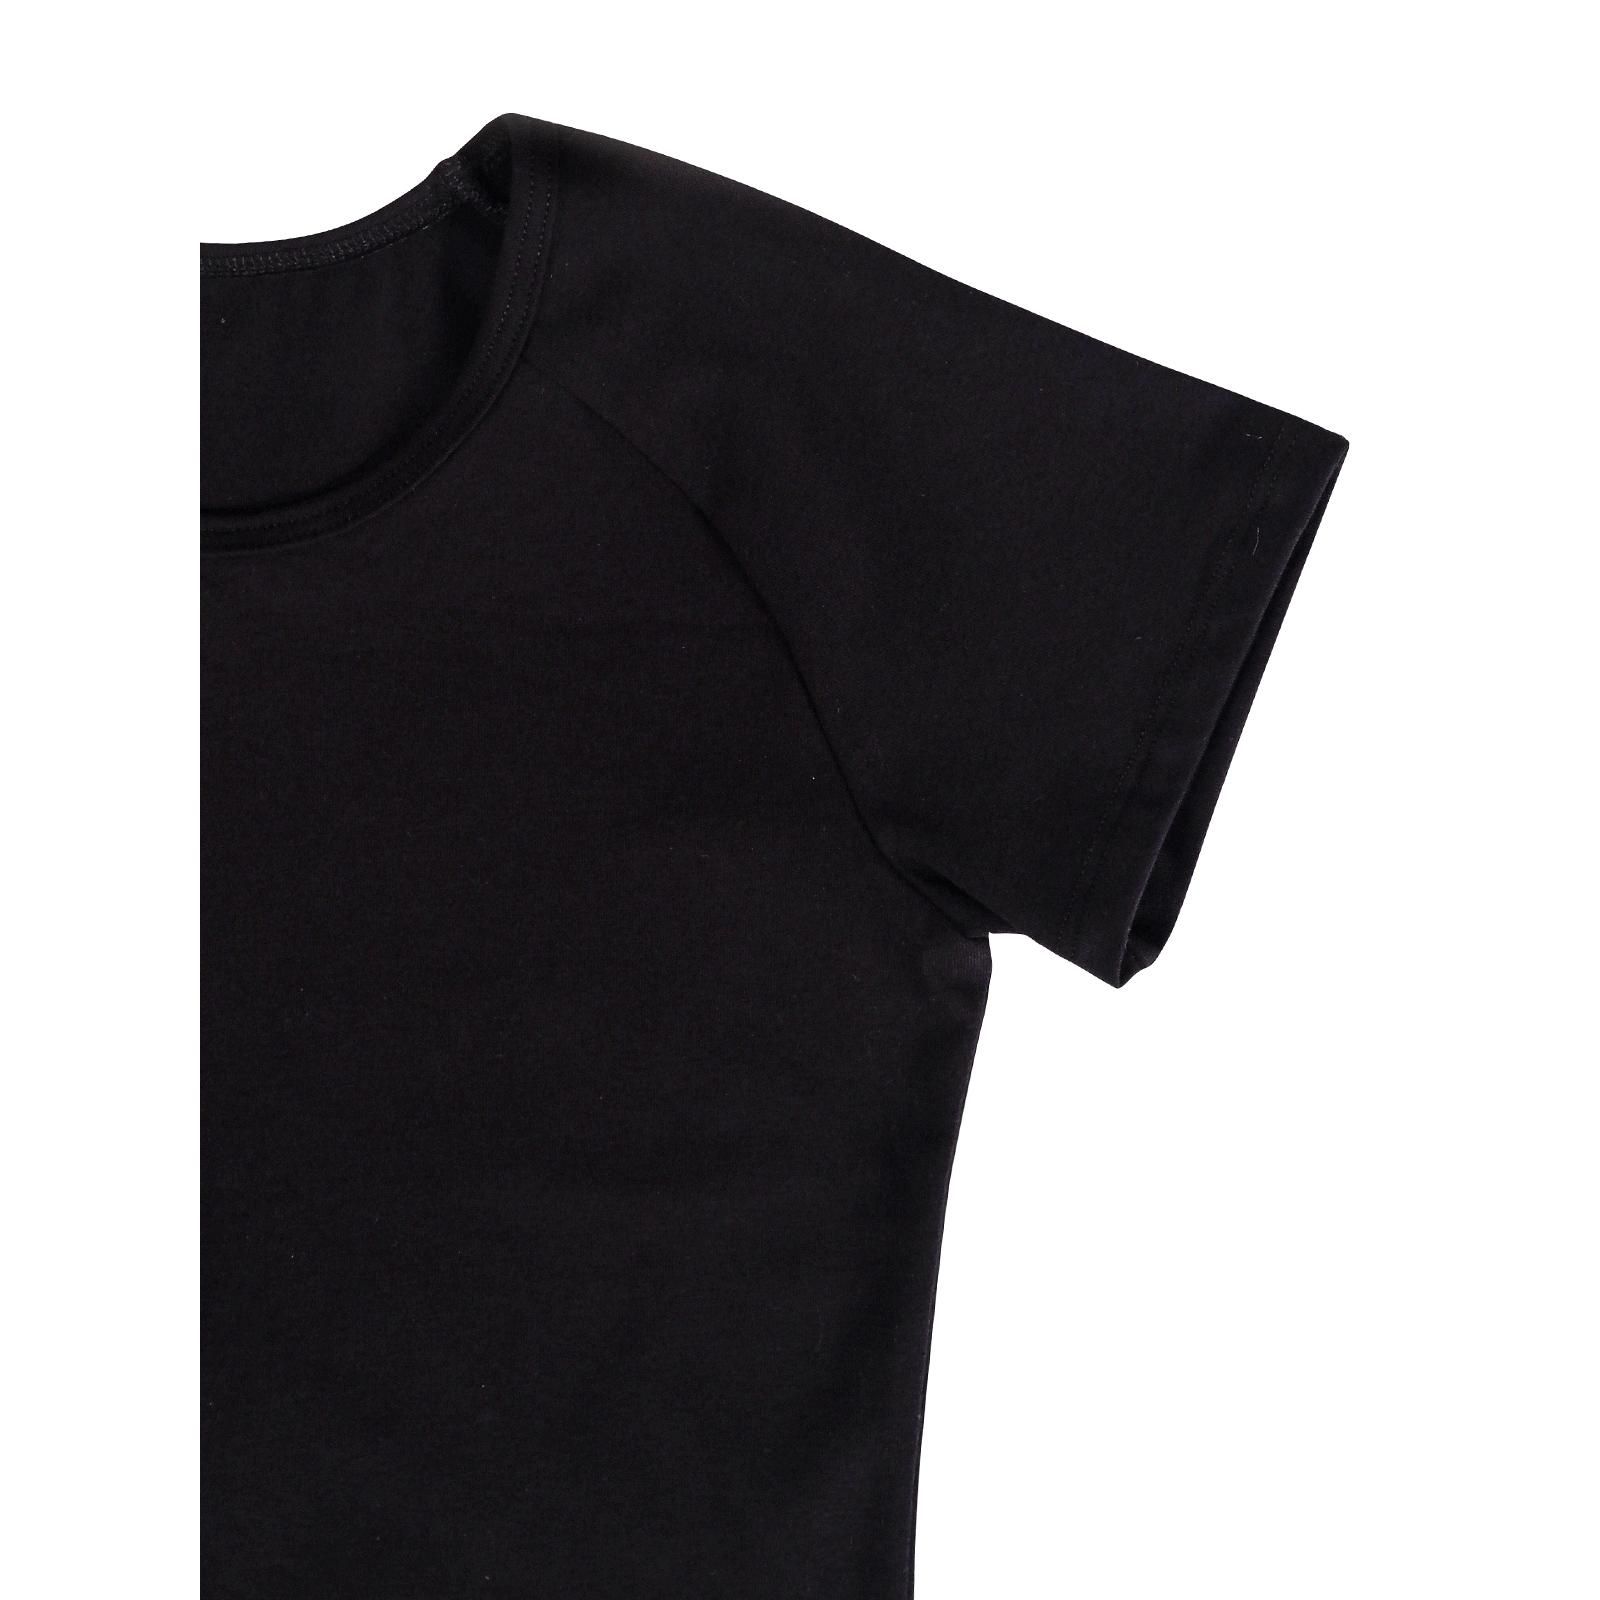 Camiseta Mangas Raglán de Algodón SOLO Negro Talla 40